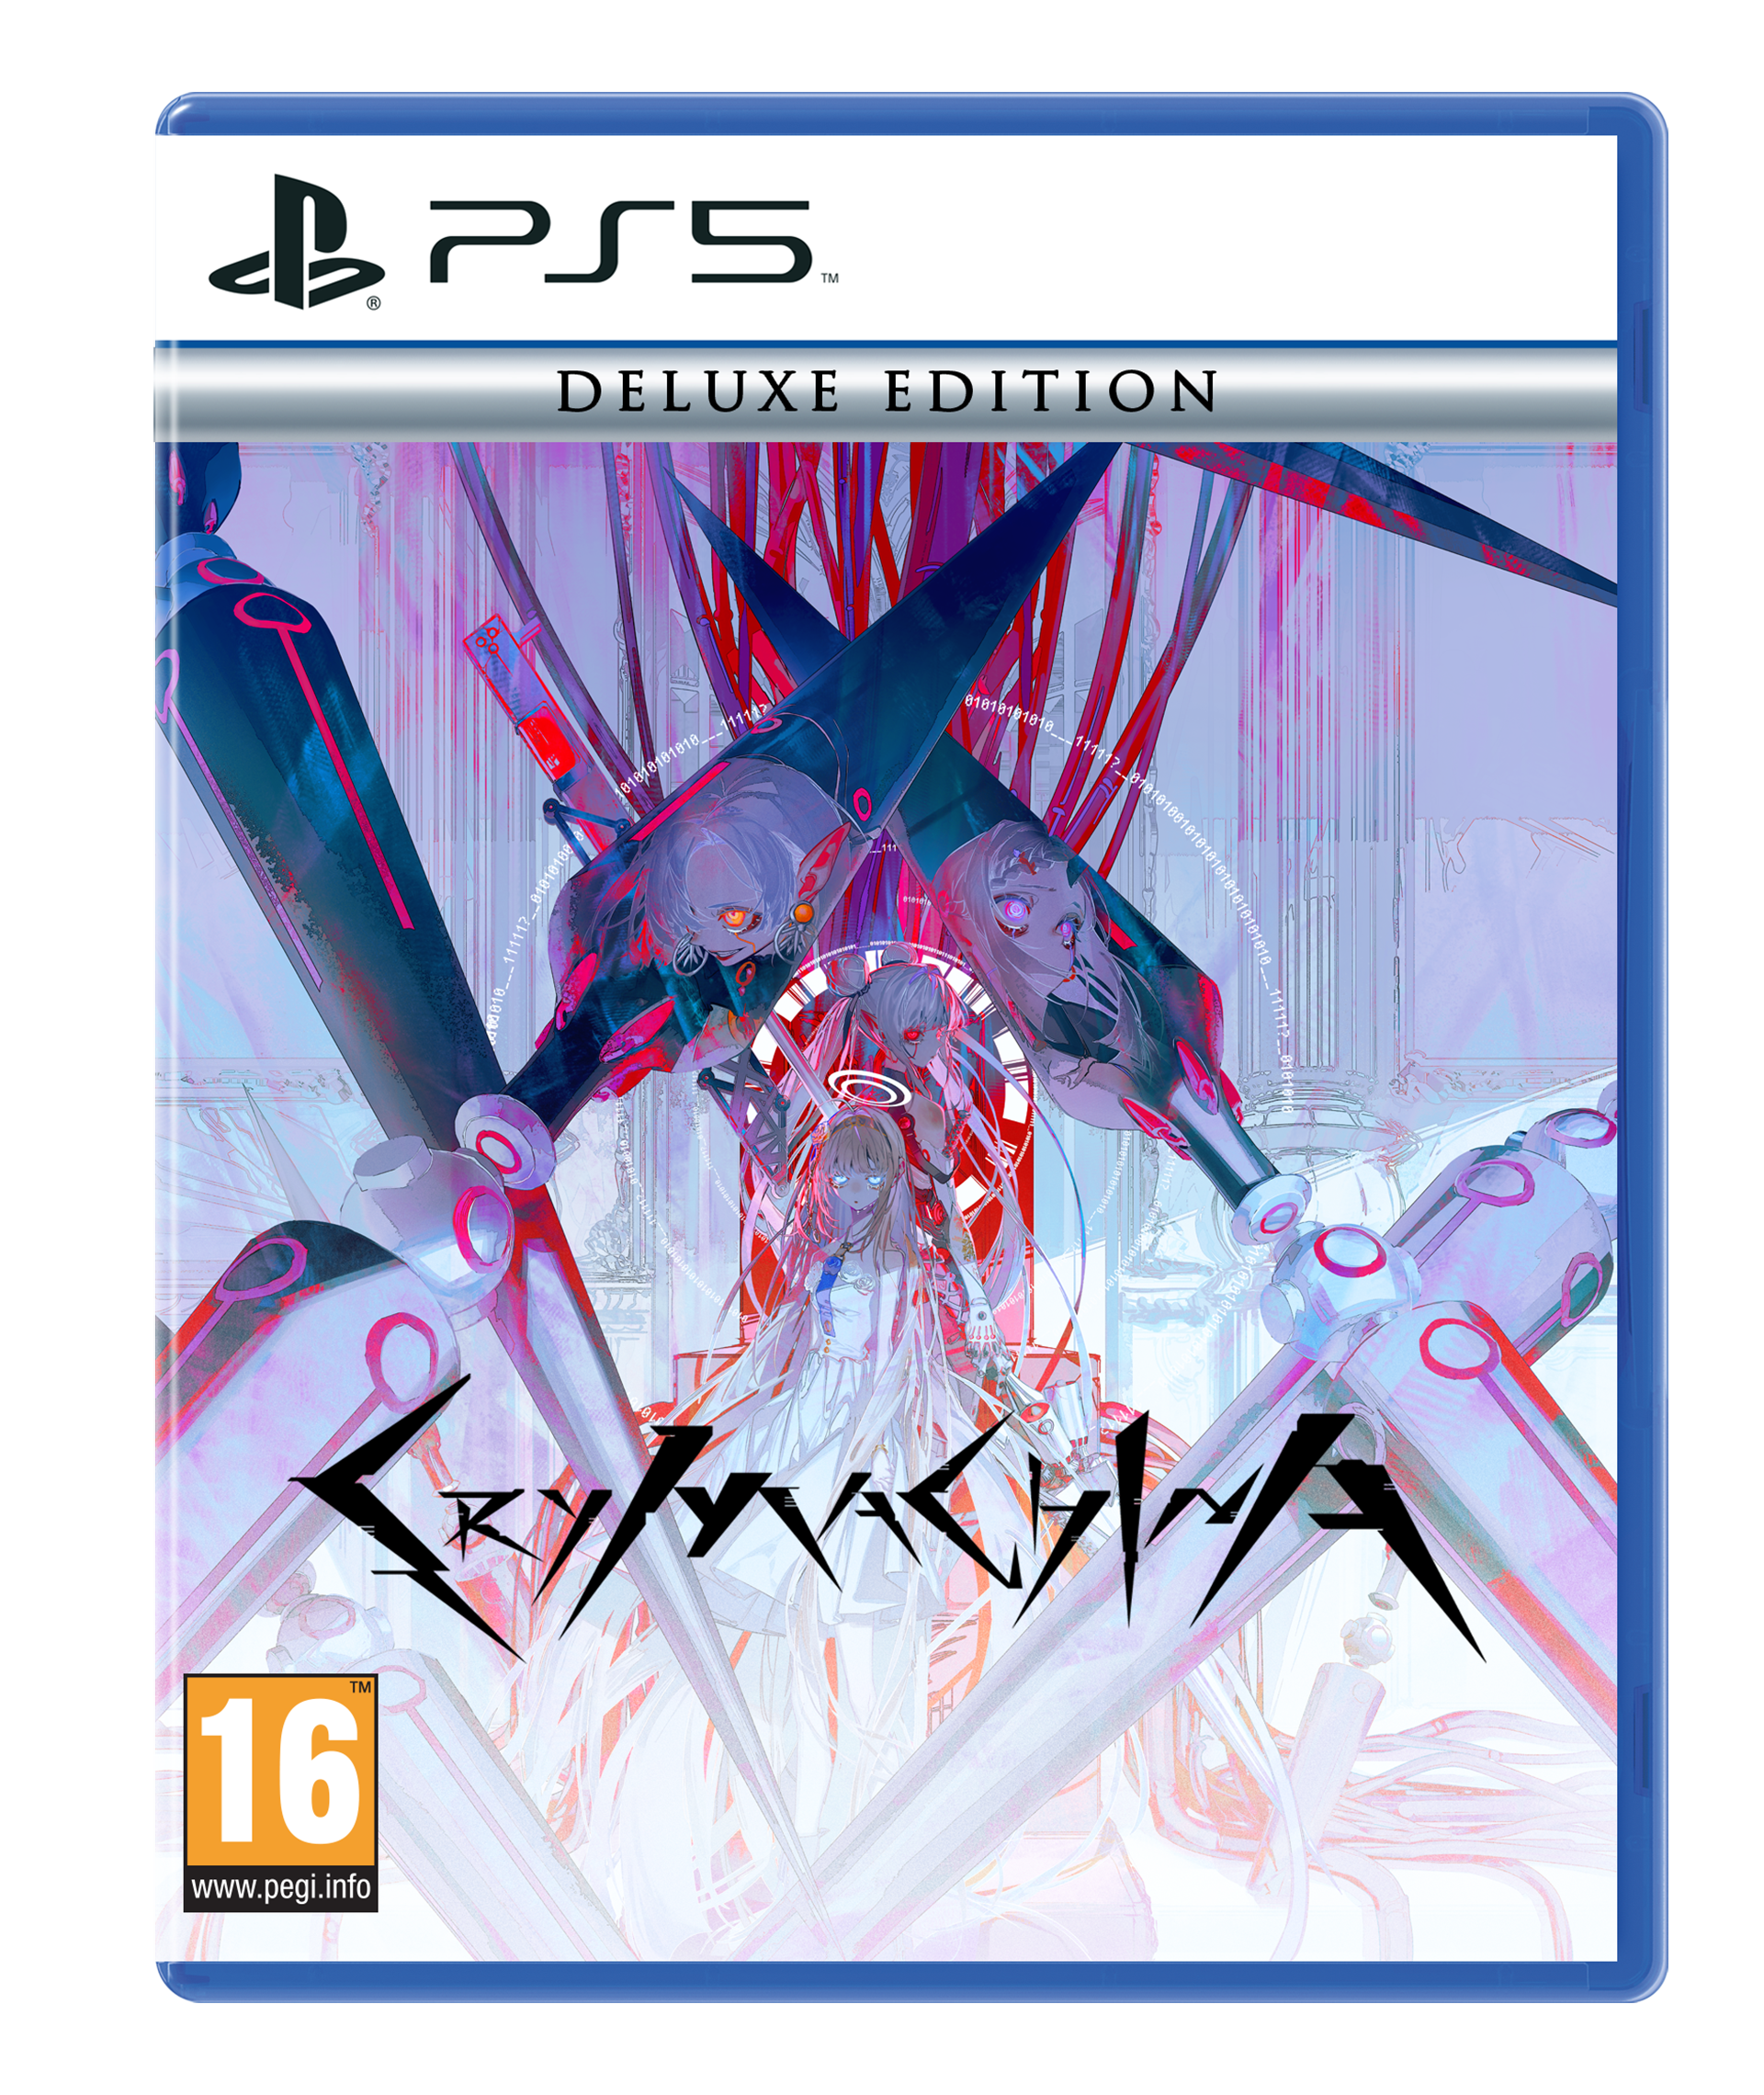 CRYMACHINA - Limited Edition - PS5®